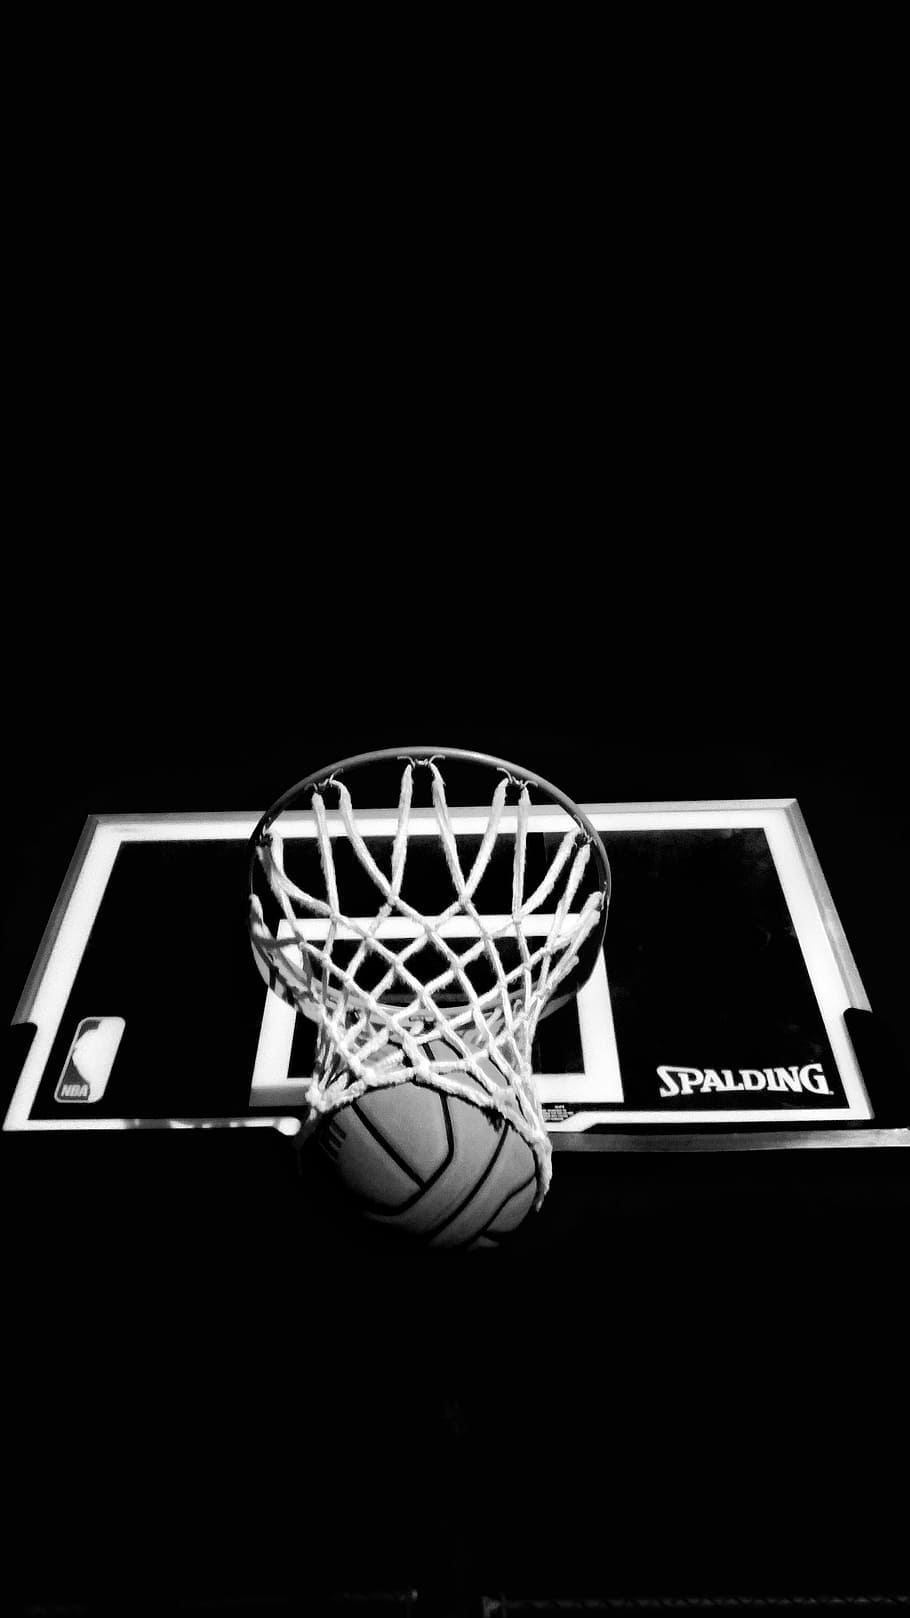 negro, blanco, tablero de baloncesto spalding, oscuro, anillo, tablero, baloncesto, pelota, deporte, espacio de la copia